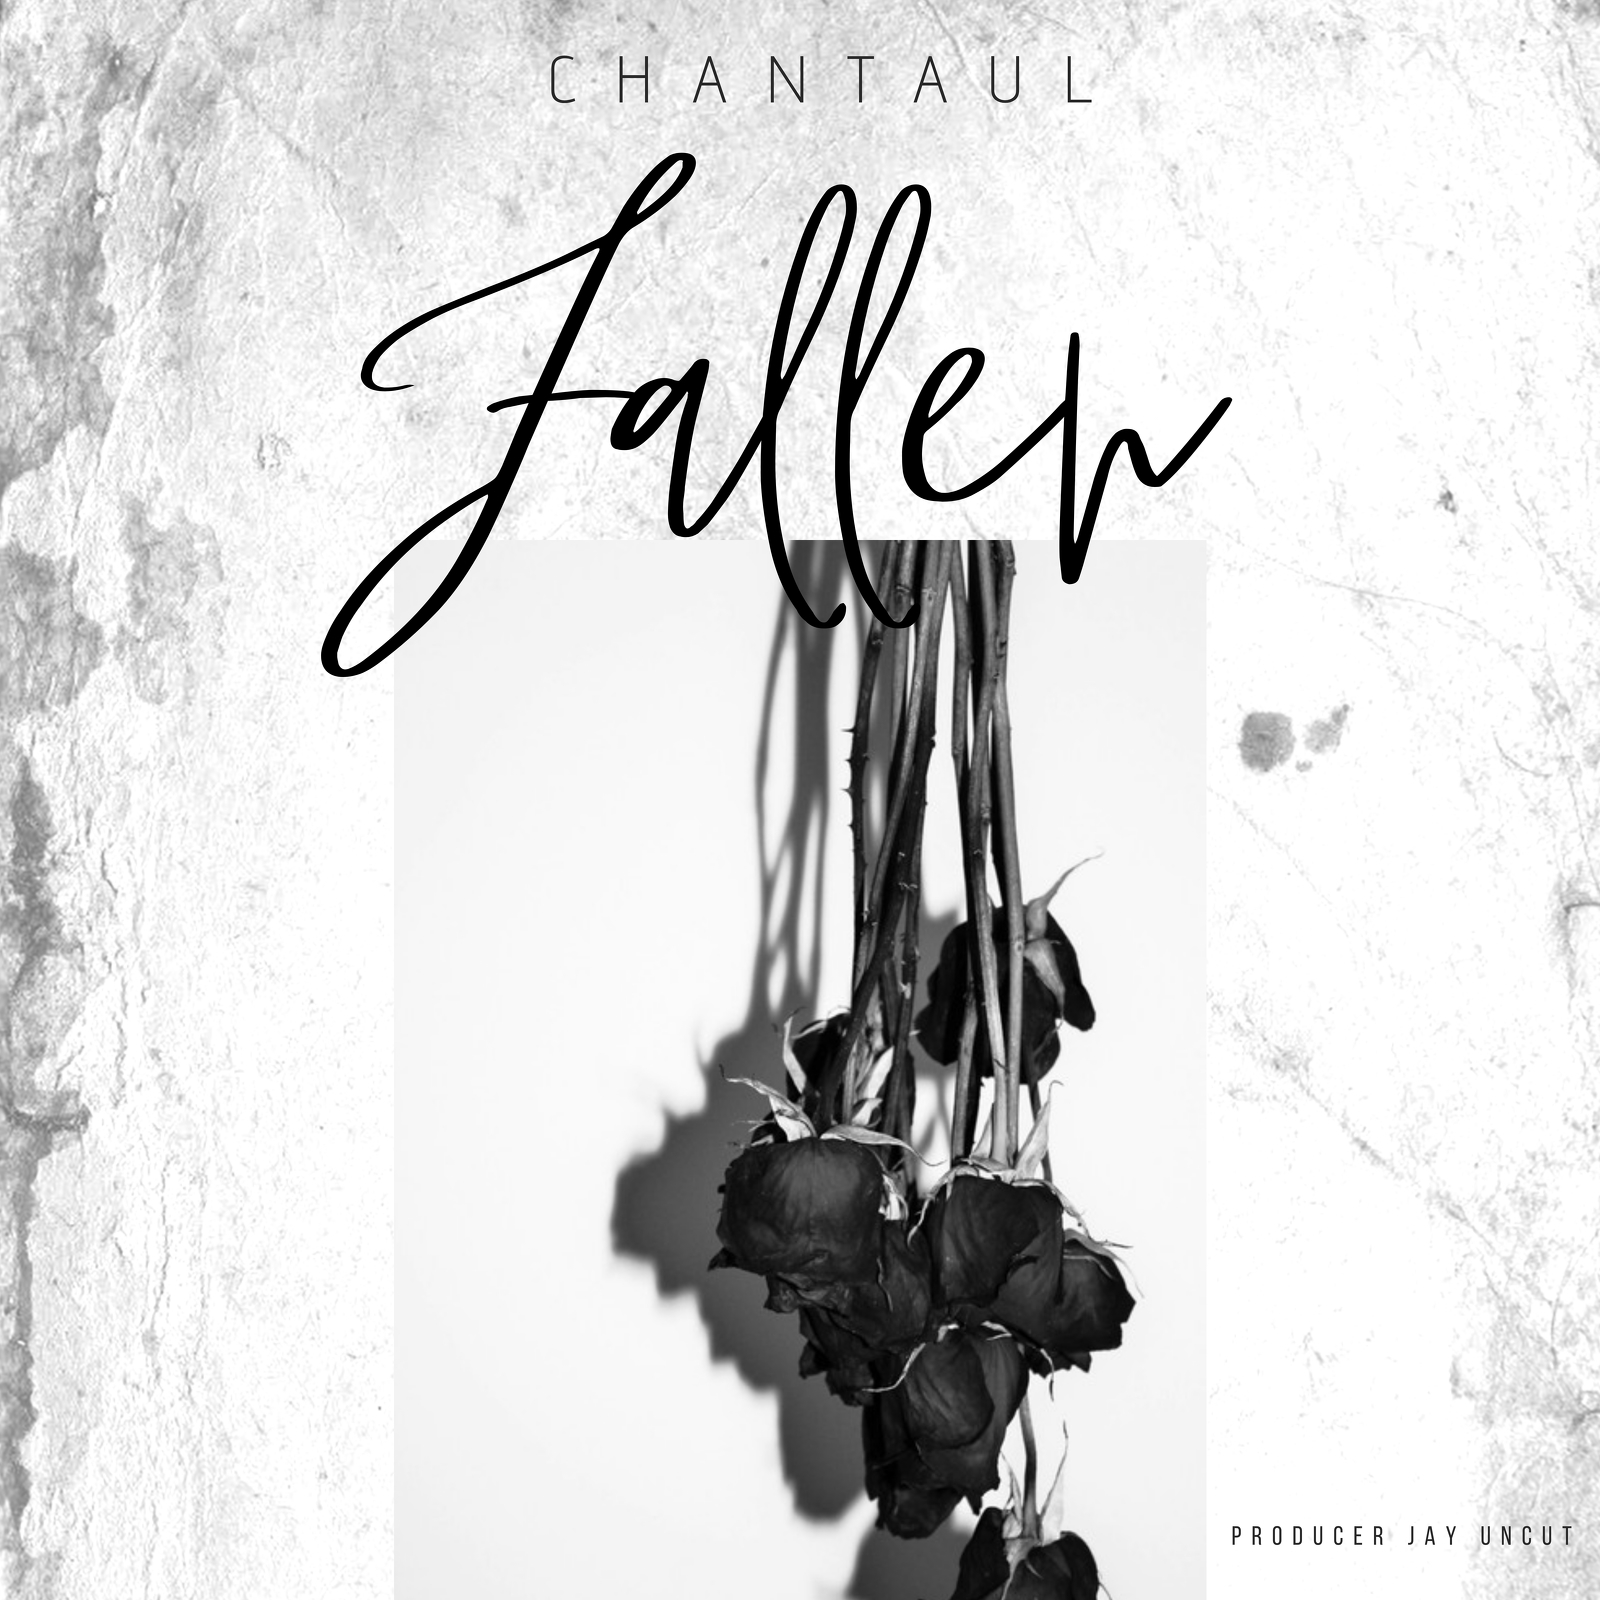 Chantaul Williams Drops Hot New Single “Fallen”